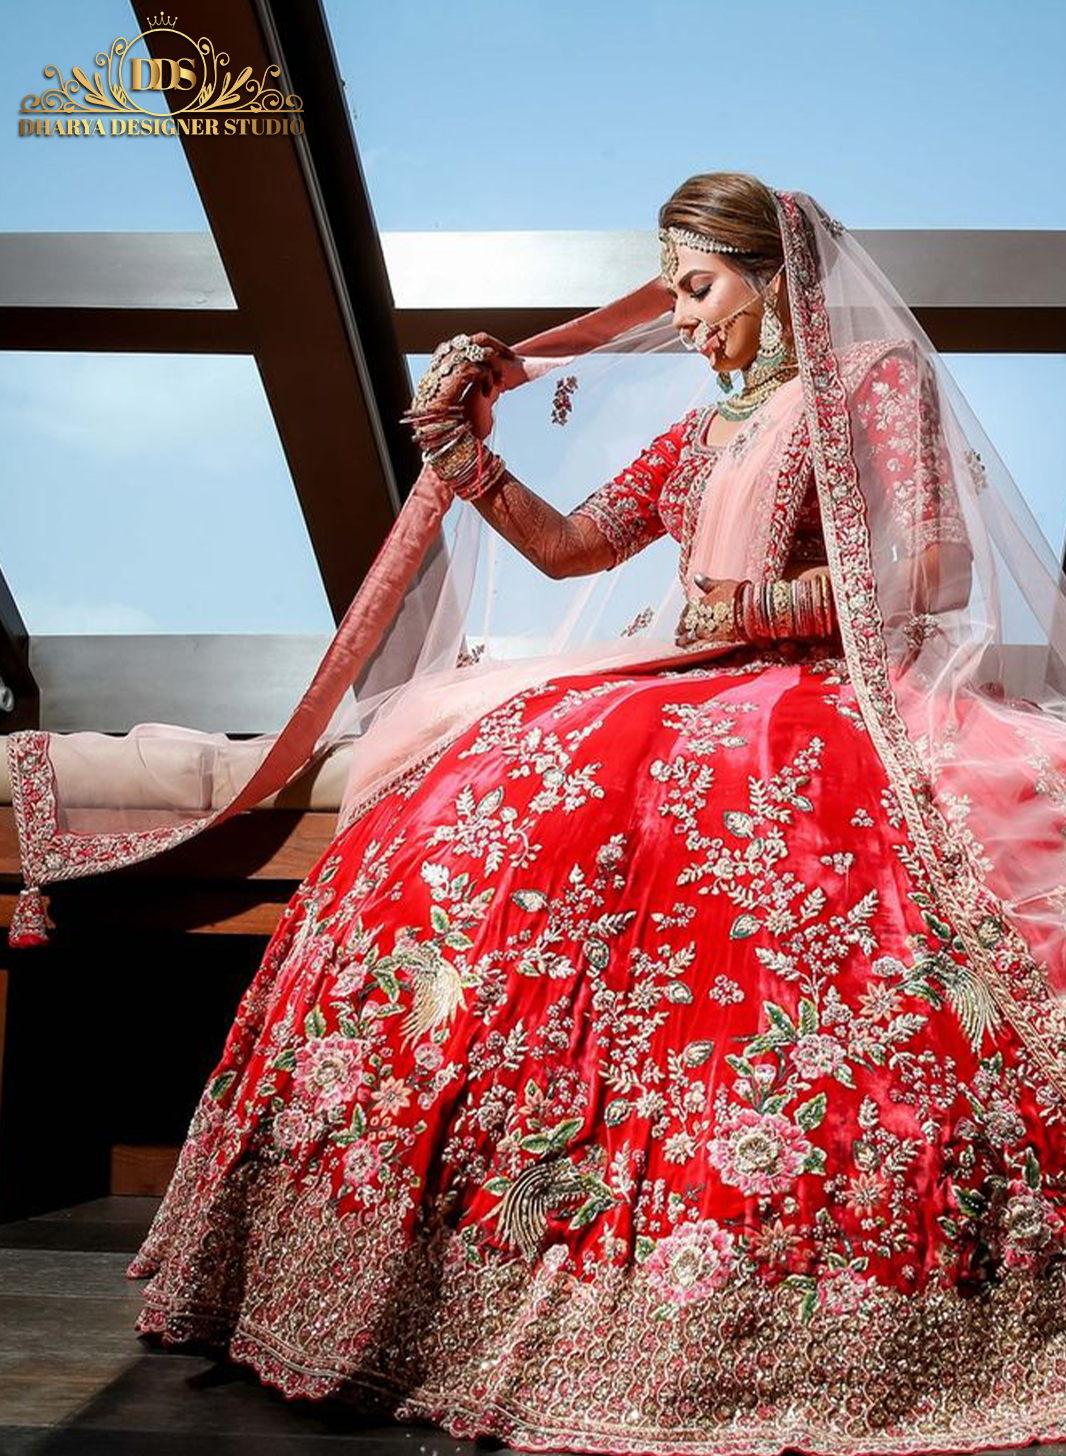 Decoding Deepika Padukone's Wedding Dress | Filmfare.com